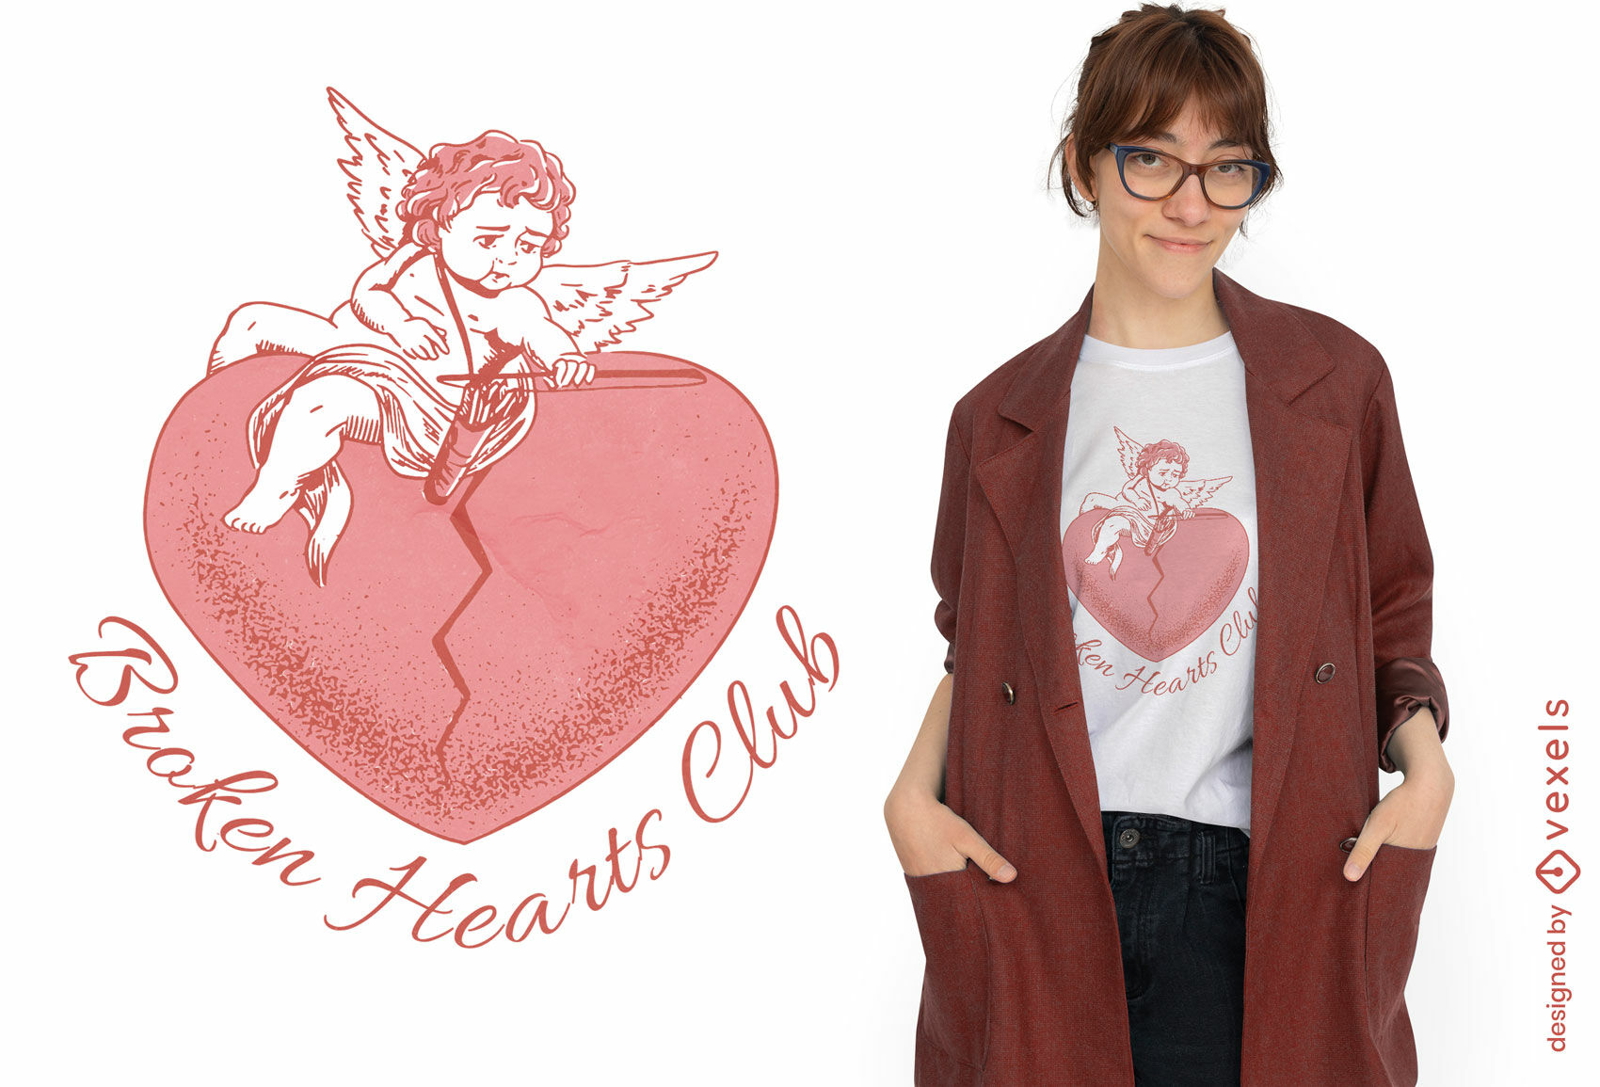 Broken hearts club cupid t-shirt design